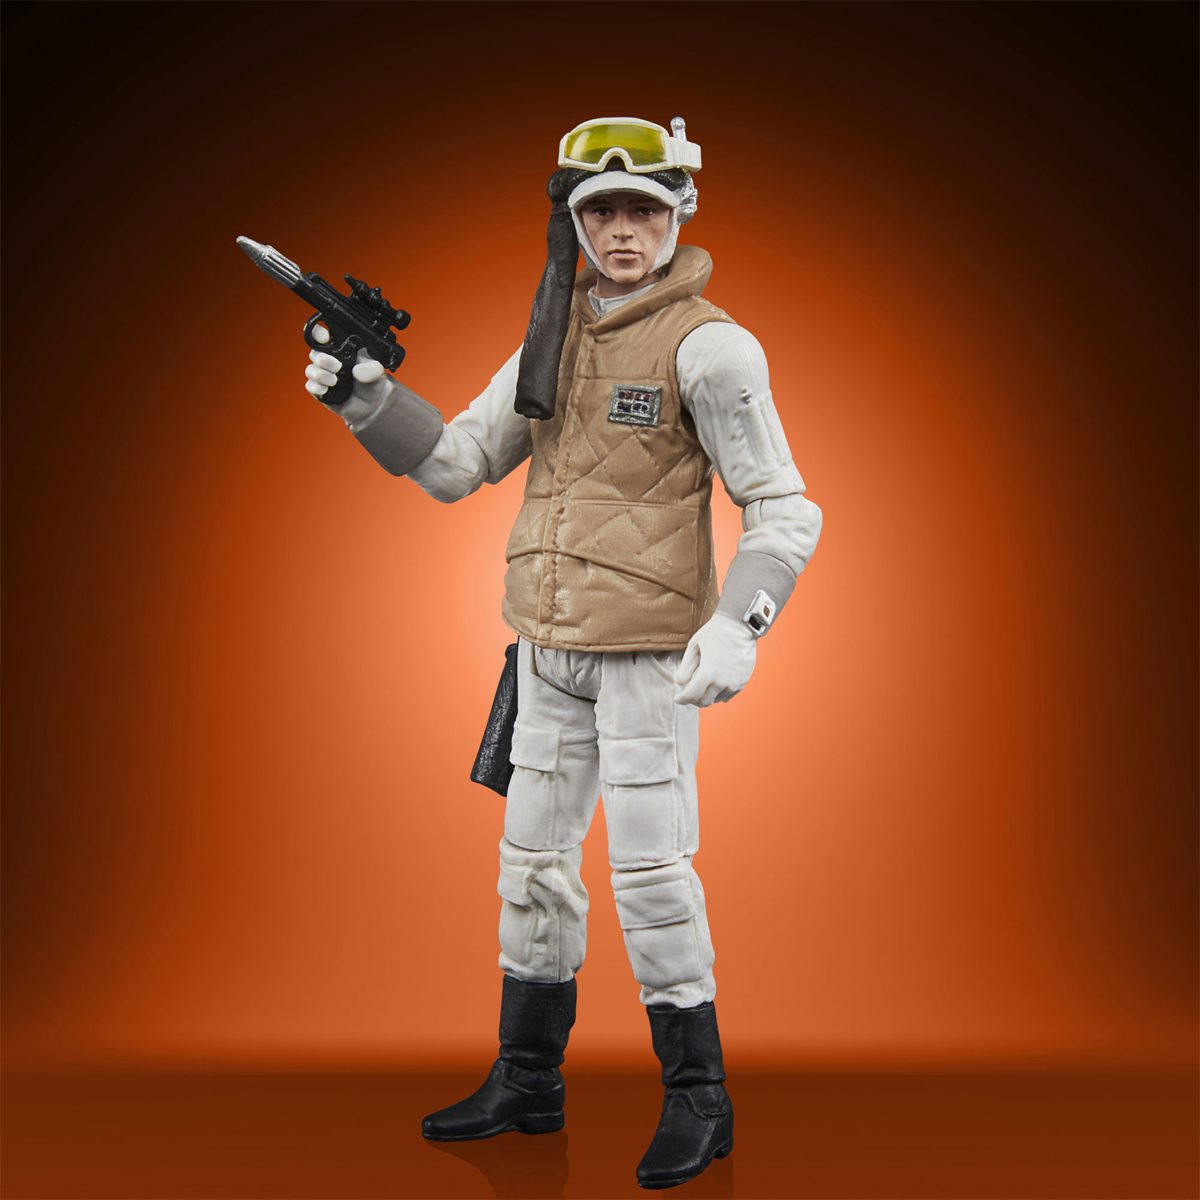 Kenner Star Wars Deluxe Hoth Rebel Soldier Action Figure for sale online 